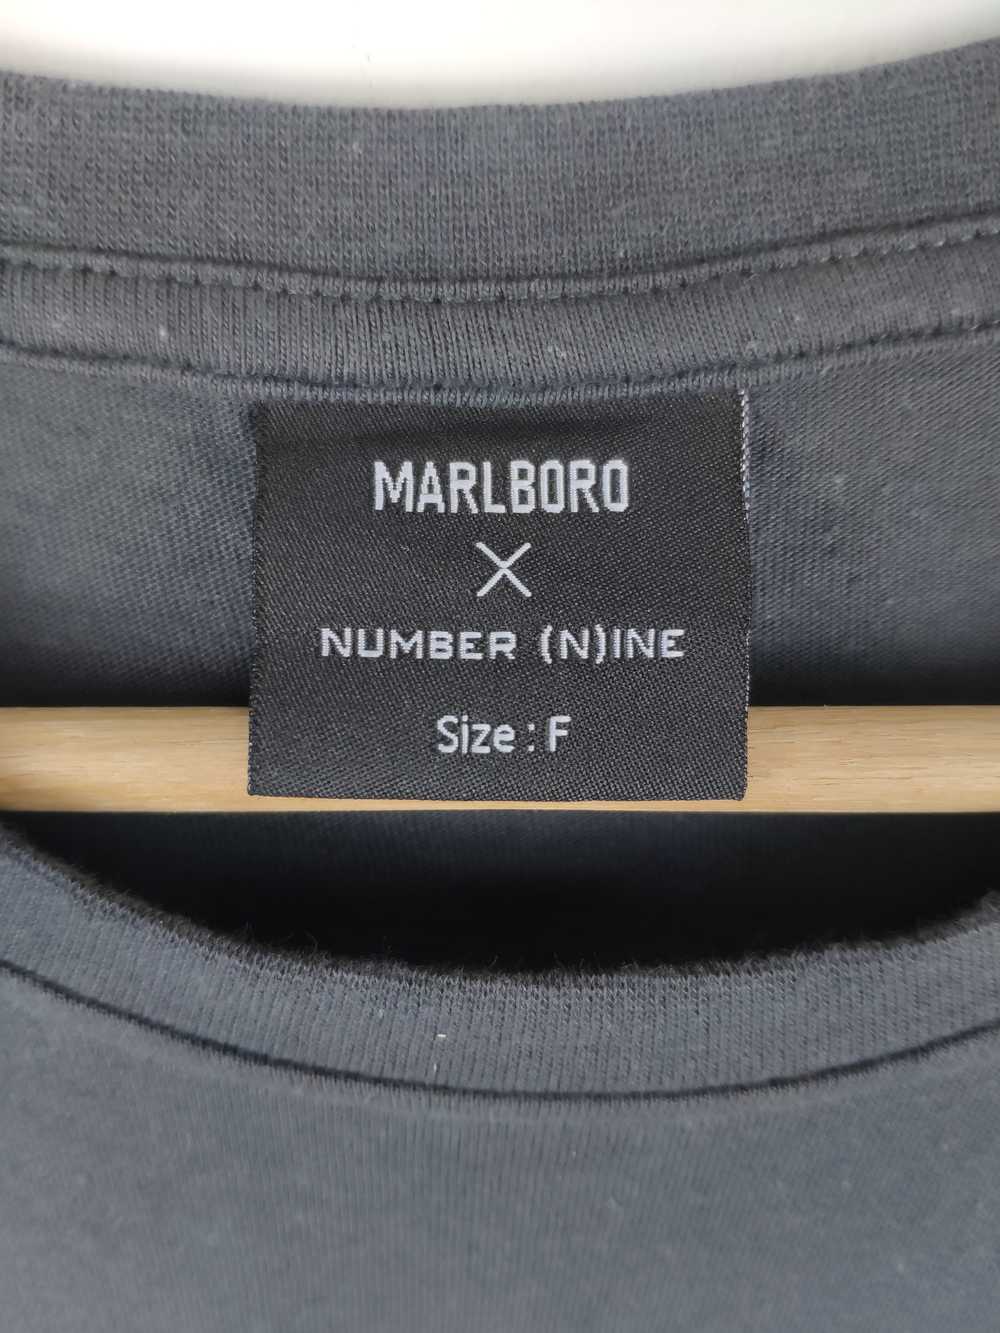 NUMBER (N)INE Vintage Number Nine x Marlboro Tee - image 4